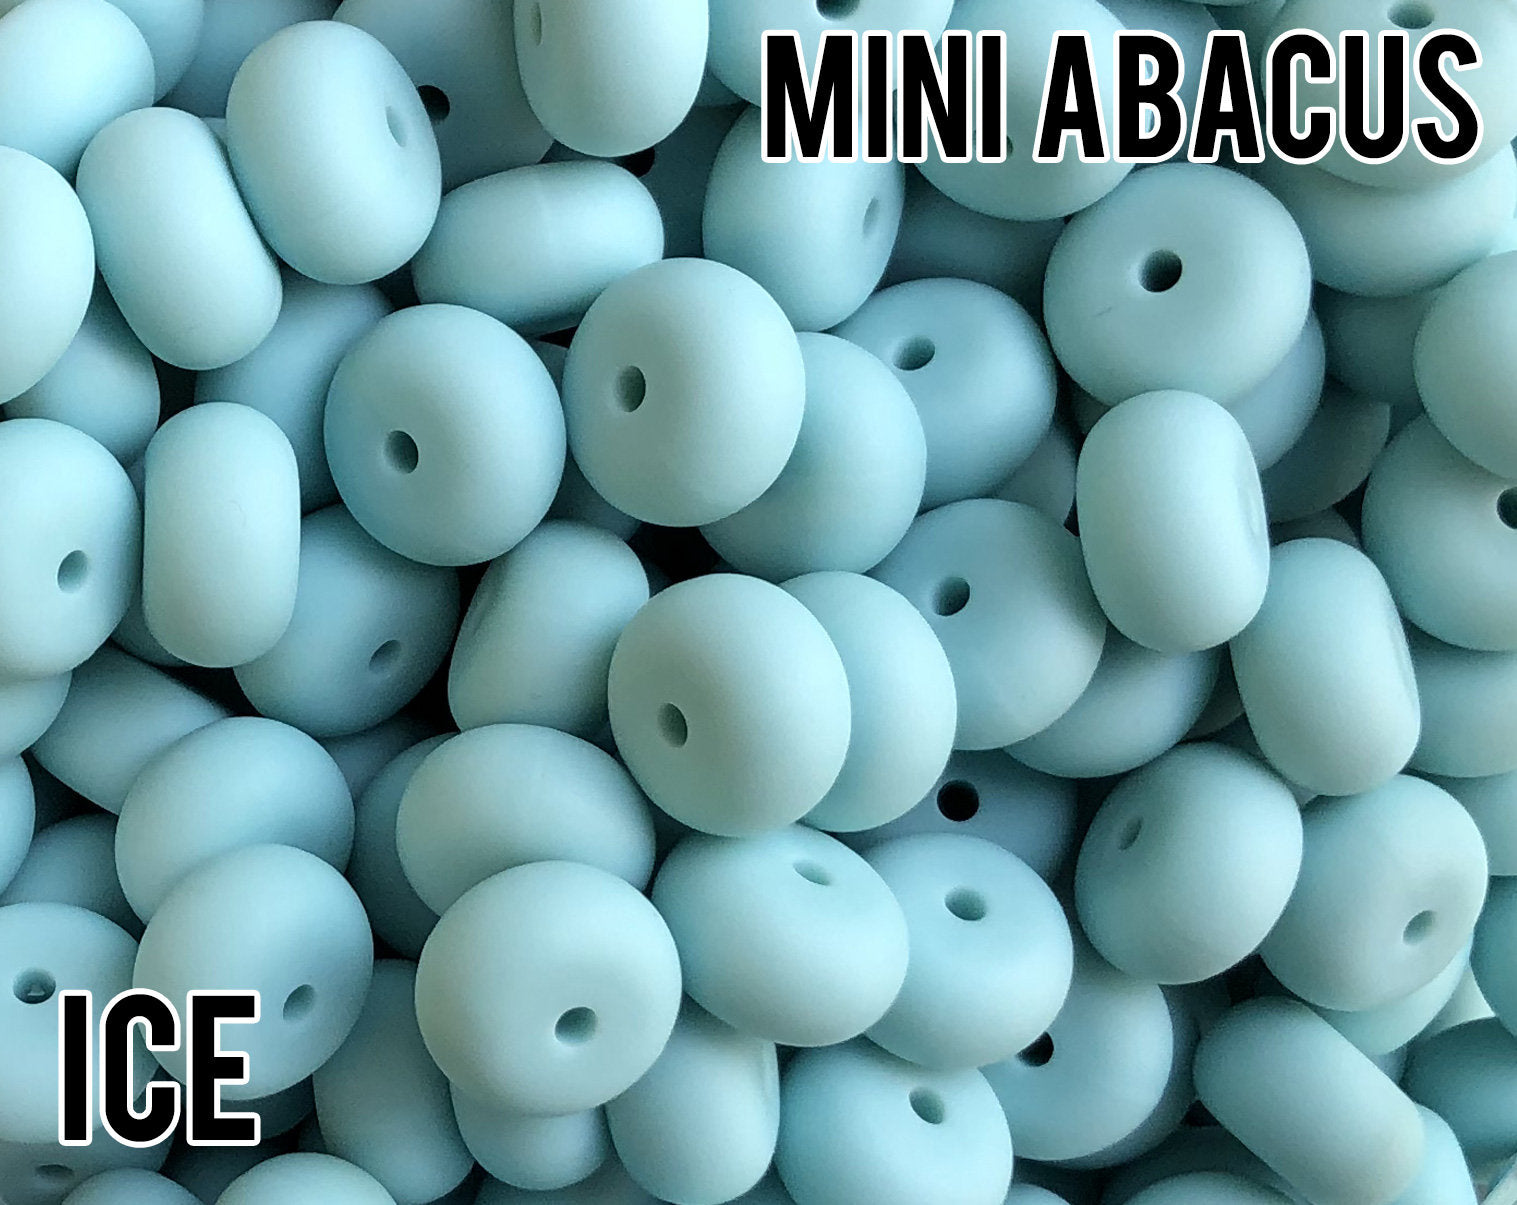 Mini Abacus Ice Silicone Beads 10-1,000 (aka Light Blue, Light Teal, Turquoise) Bulk Silicone Beads Wholesale